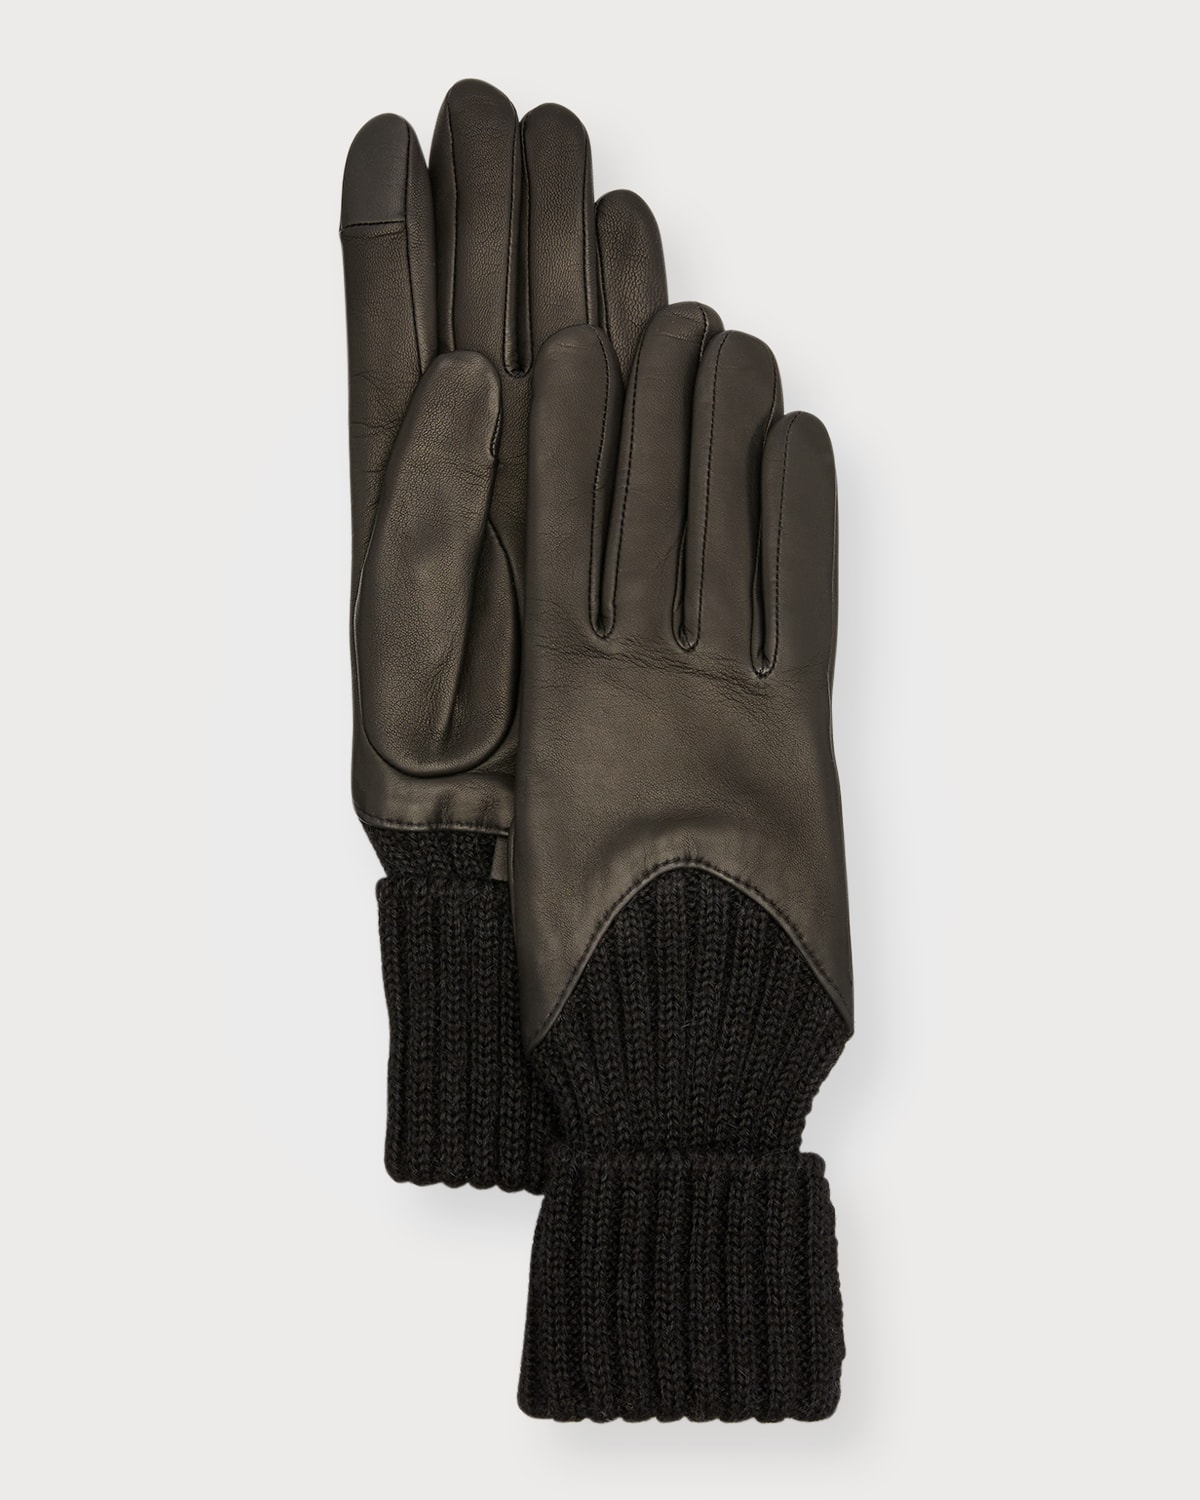 Agnelle Men's Woven Leather Gloves